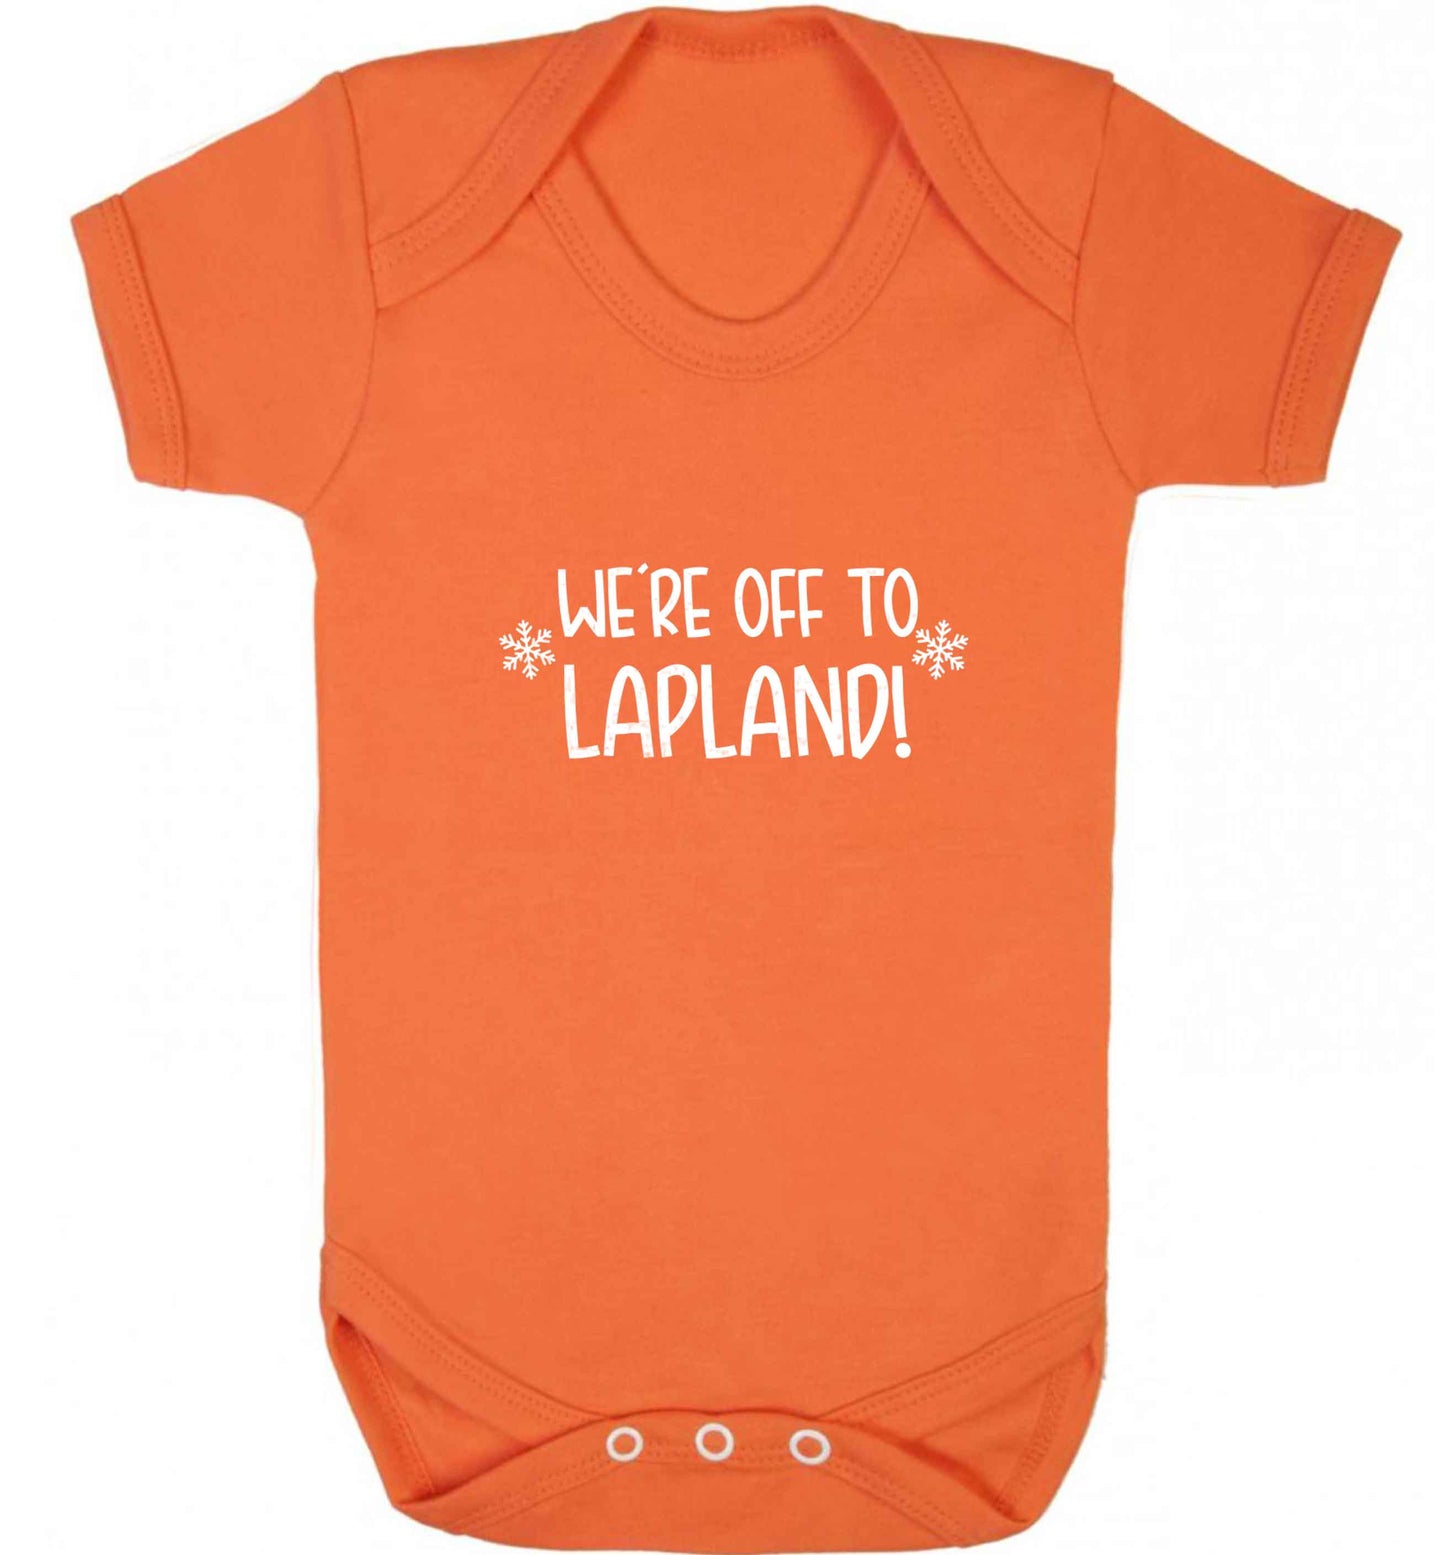 We're off to Lapland baby vest orange 18-24 months